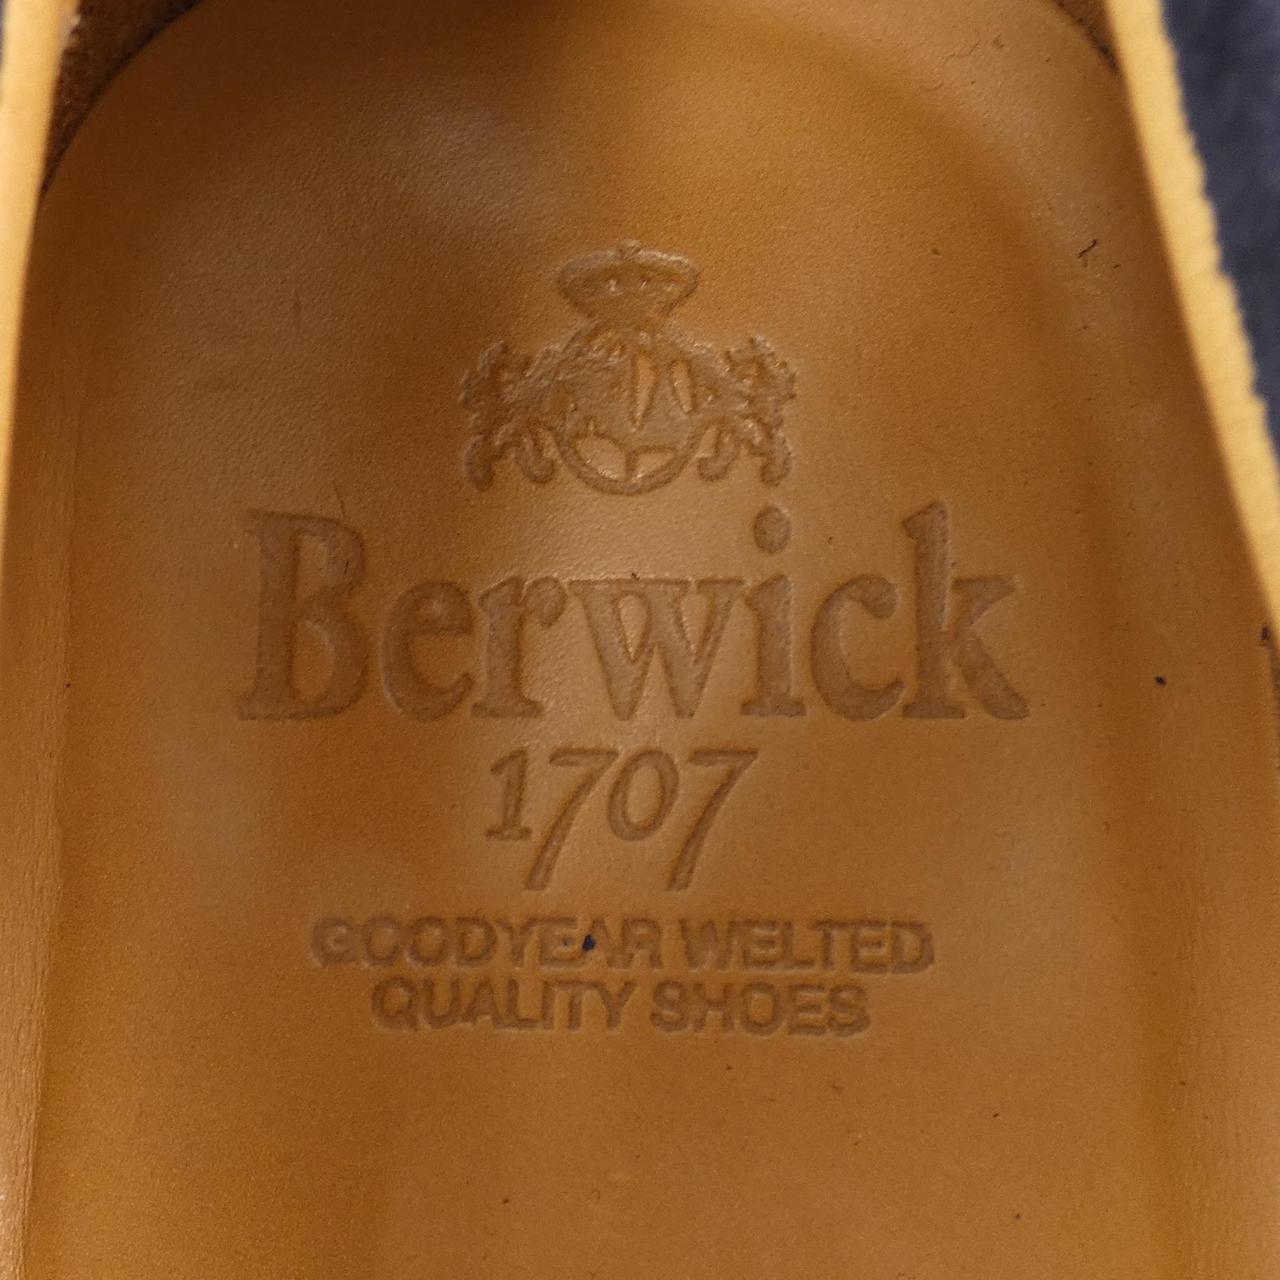 Berwick shoes